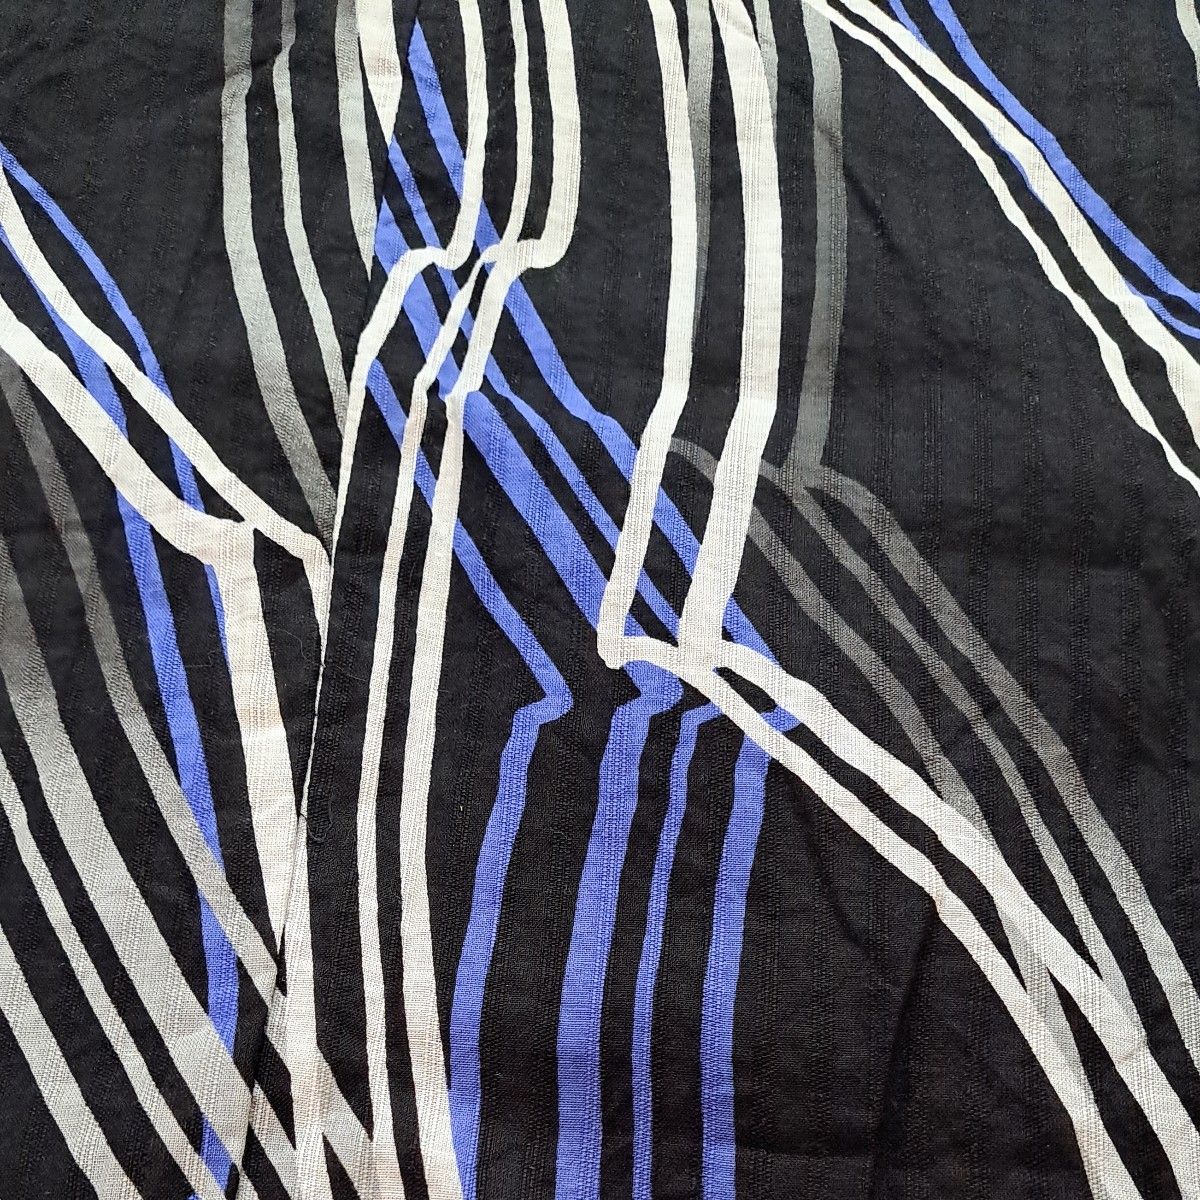 RK リョウコキクチ 浴衣 メンズ L 綿麻 ブランド ゆかた 流線 幾何学 黒 青 グレー 白 仕立て上がり 男性 和服 単品